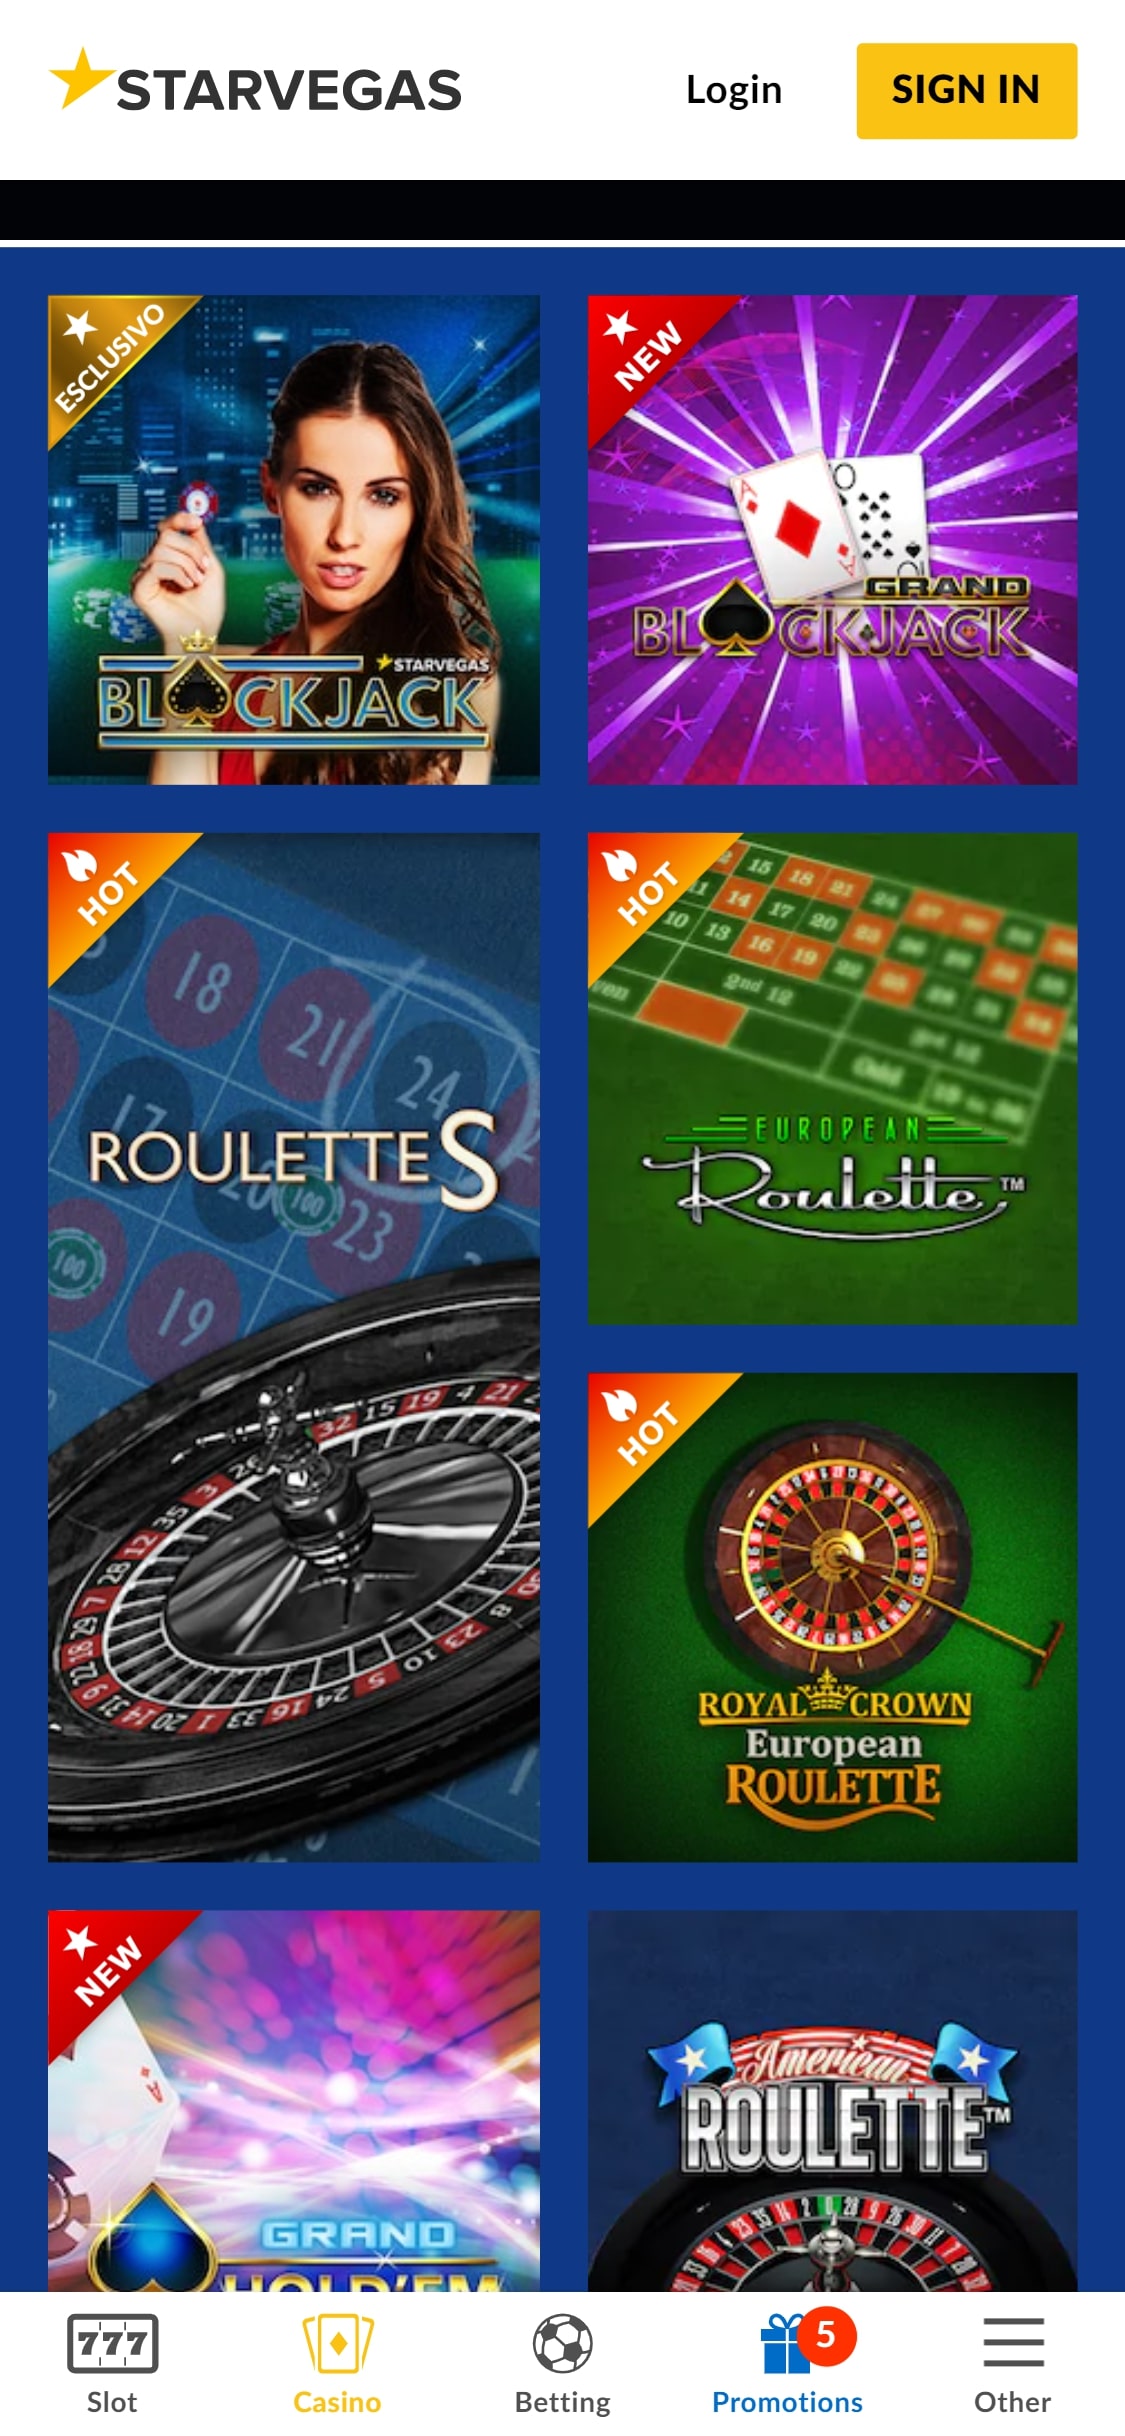 StarVegas Casino Mobile Games Review